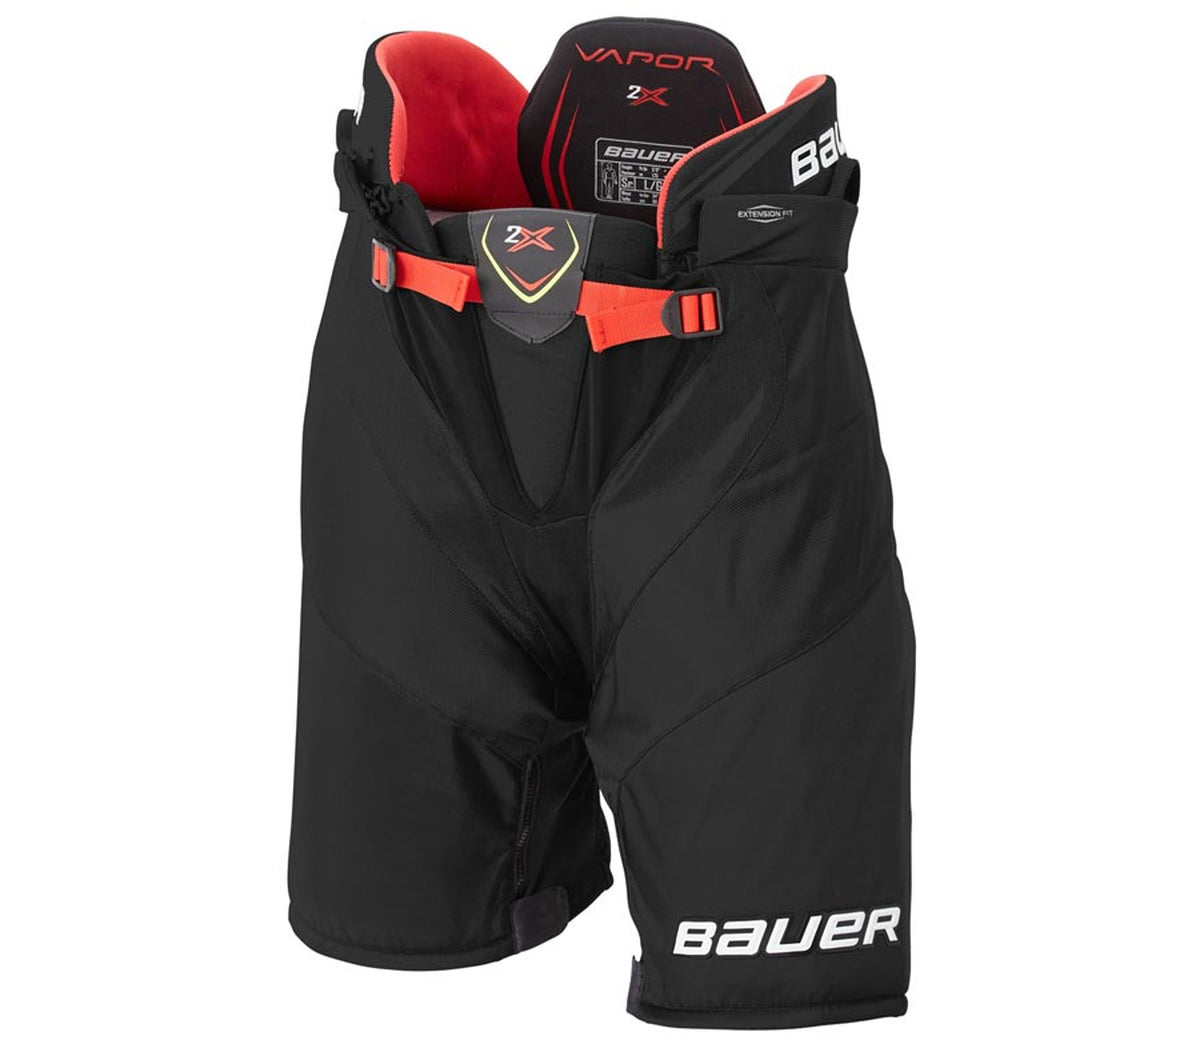 Bauer Vapor 2X JR pants